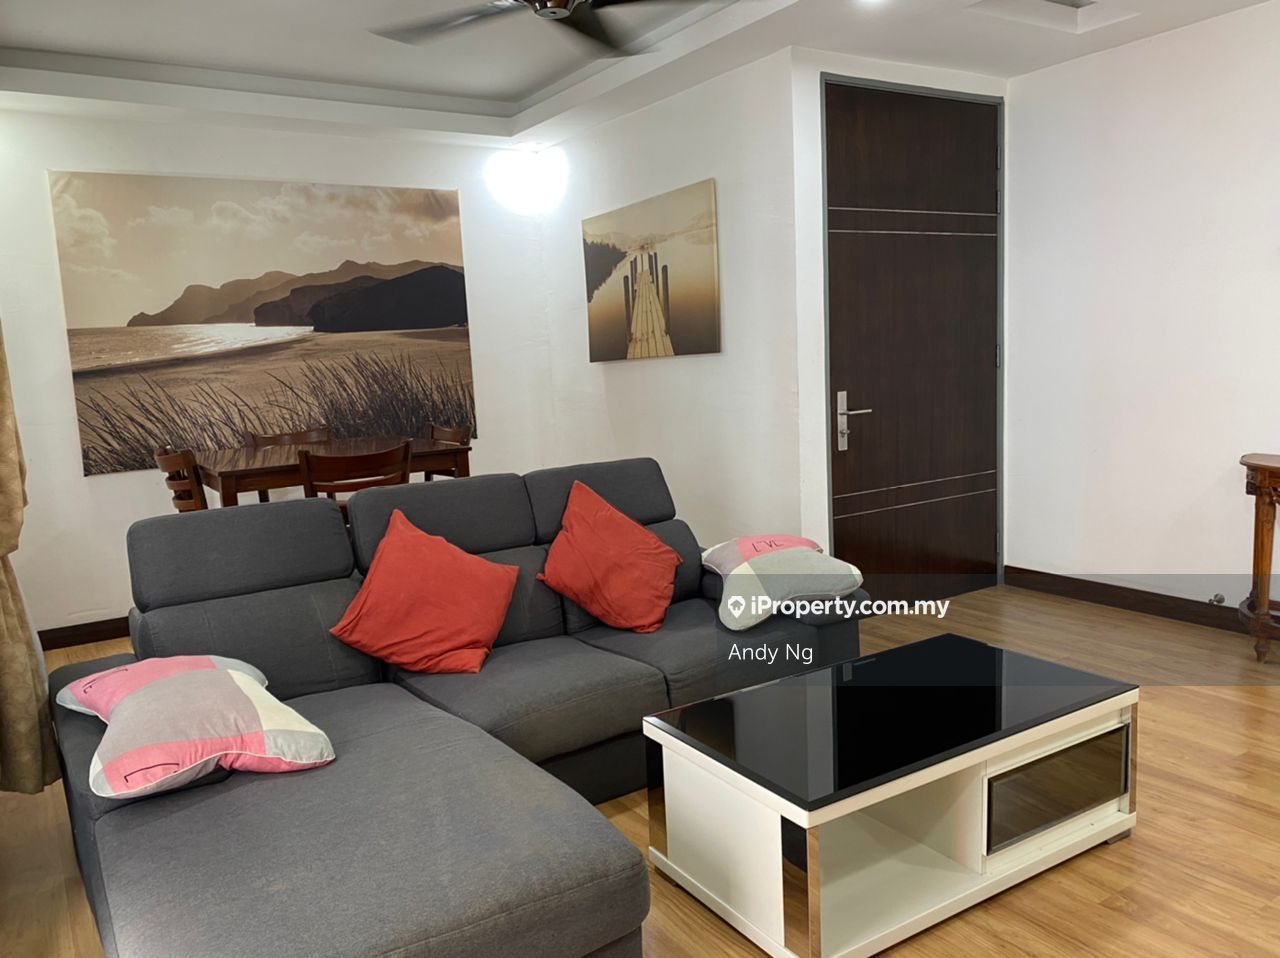 Koi Prima Condominium, Puchong for sale - RM440000 | iProperty Malaysia